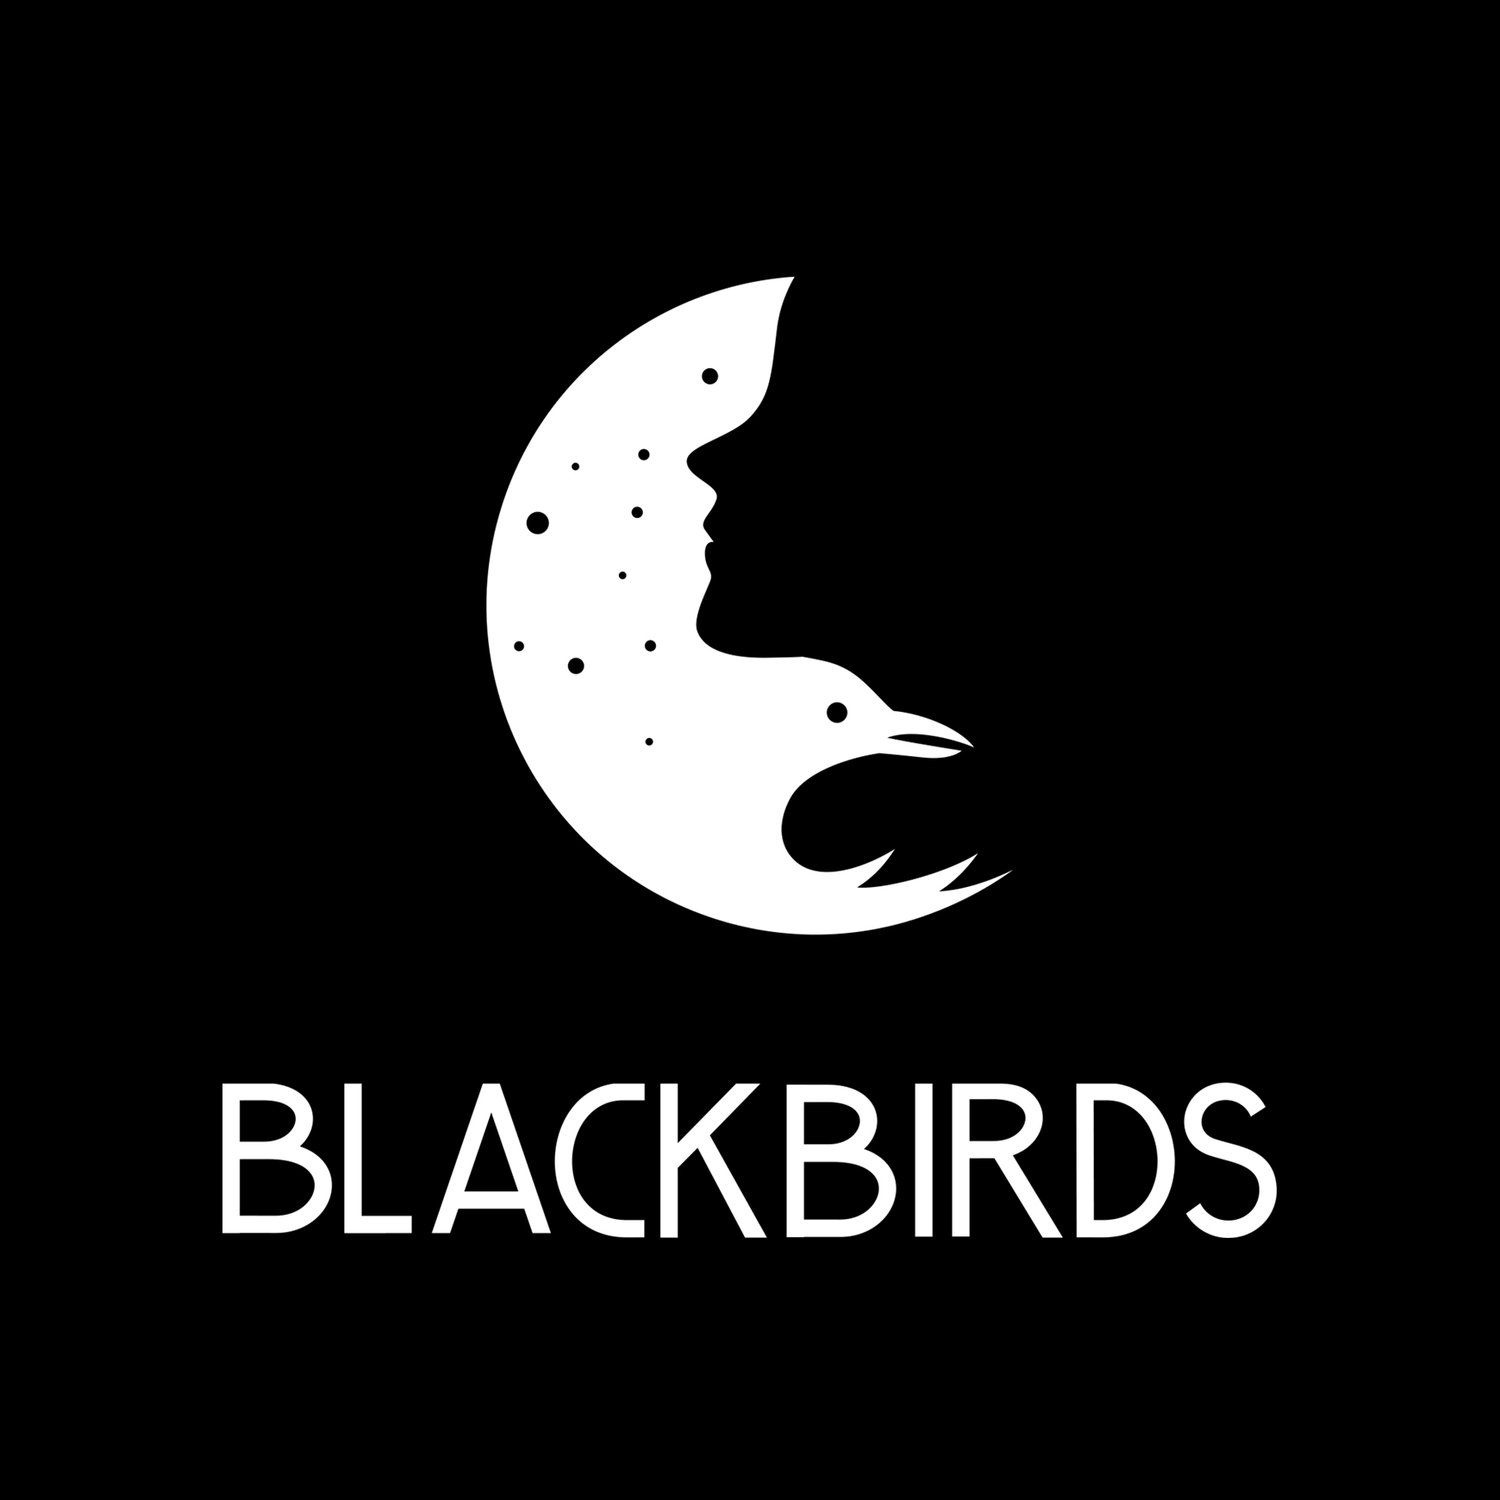 Blackbirds Environmental Justice